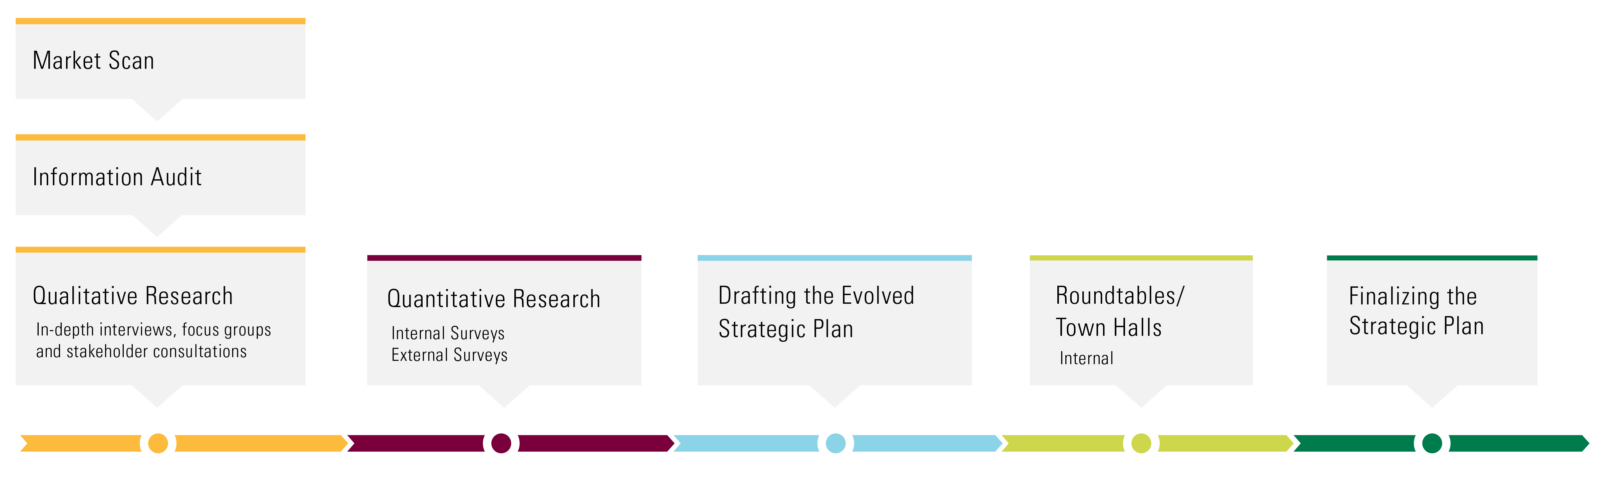 Strategic Plan Timeline graphic